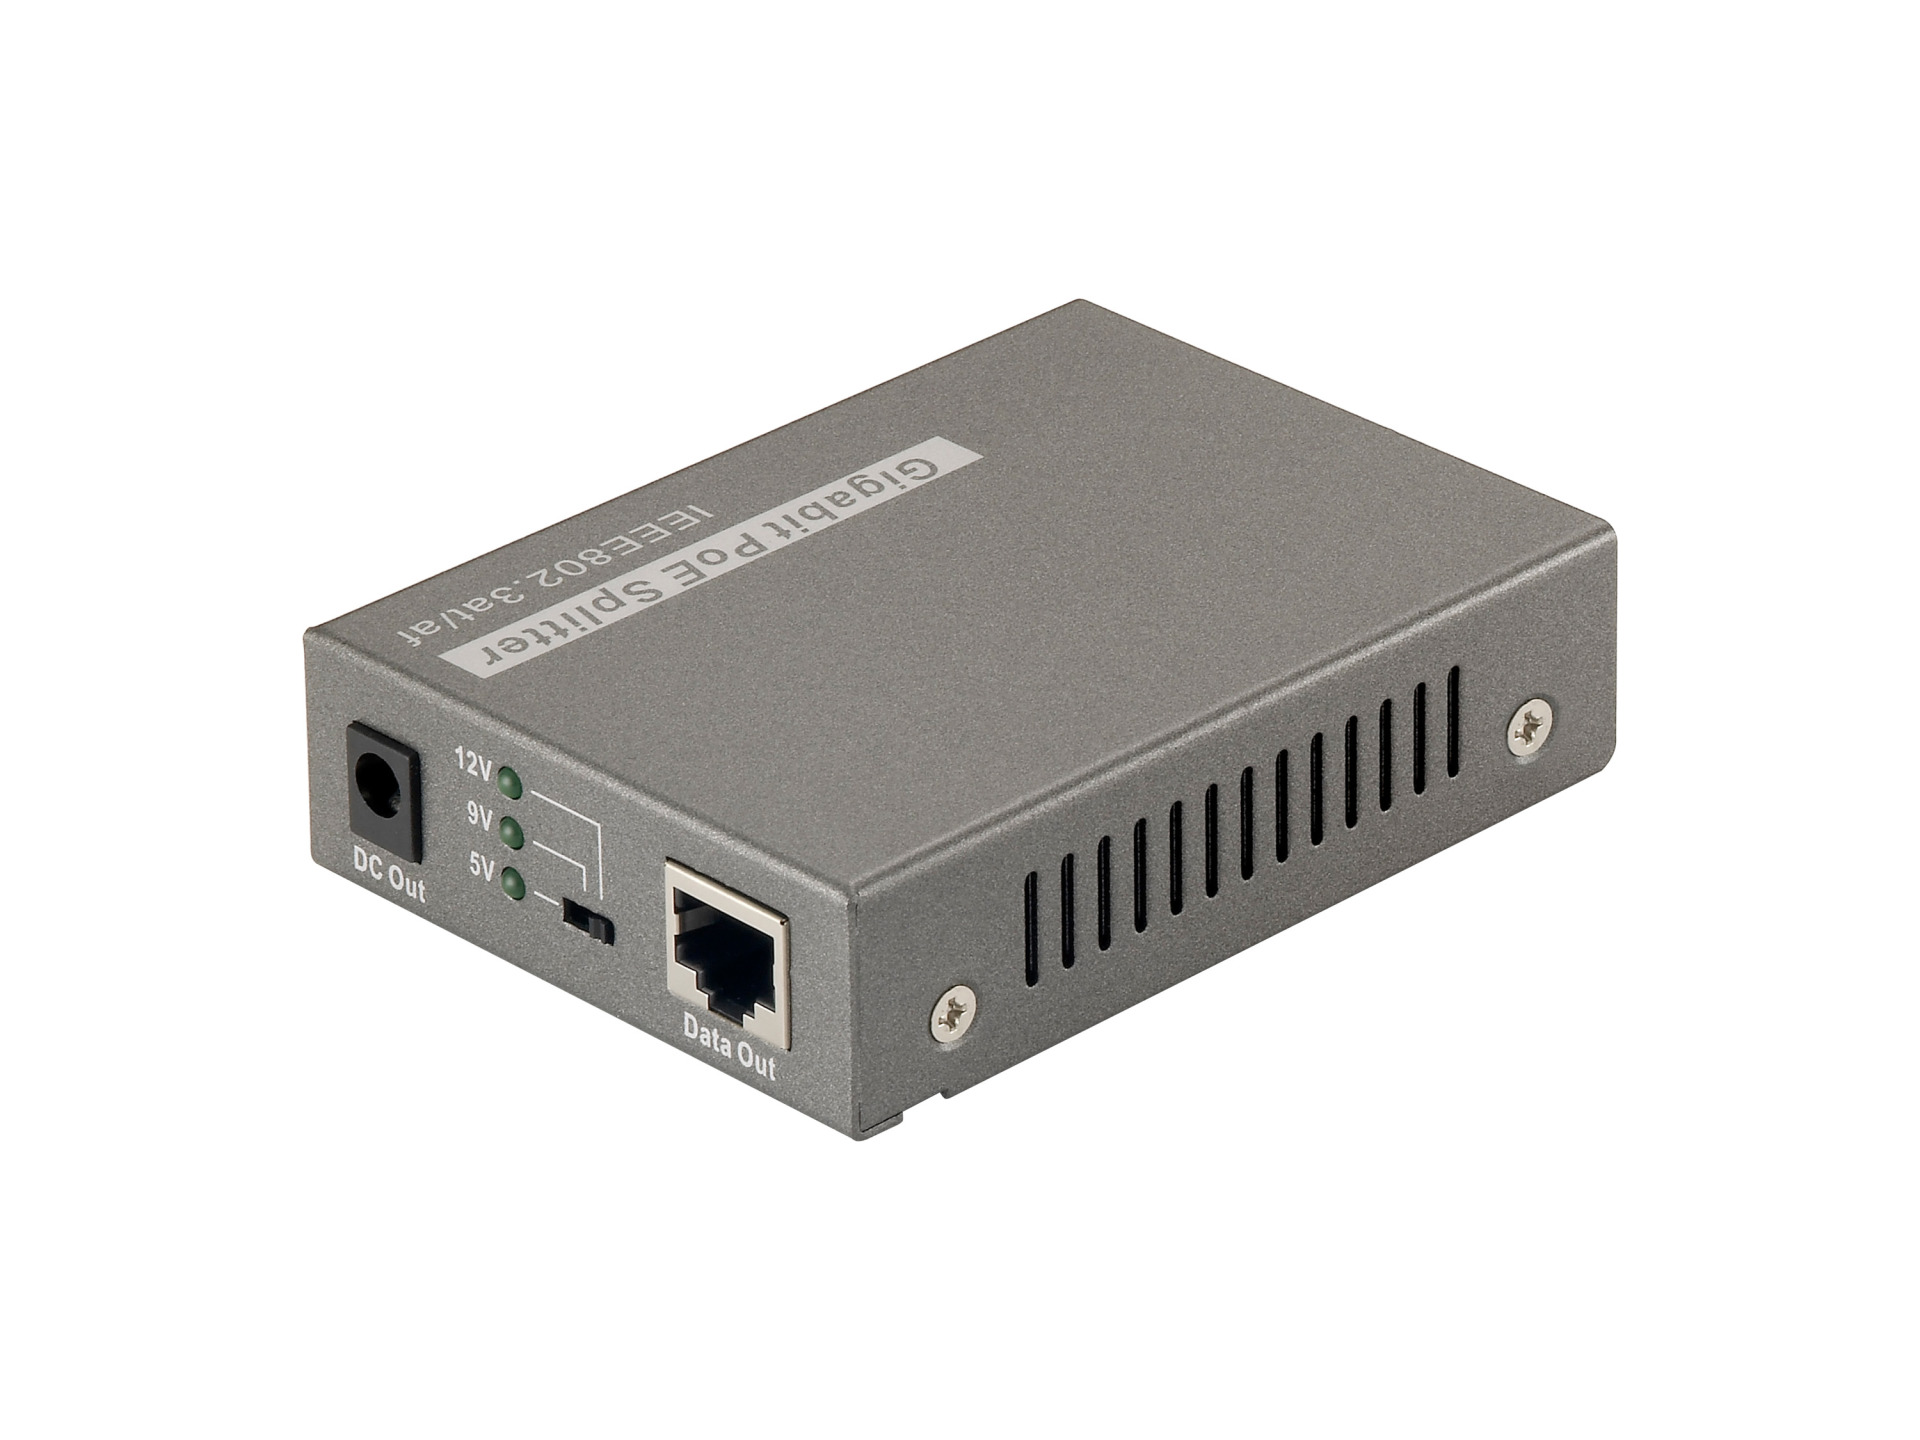 Gigabit Ethernet PoE+ Splitter,High Power 30 W IEEE802.3at